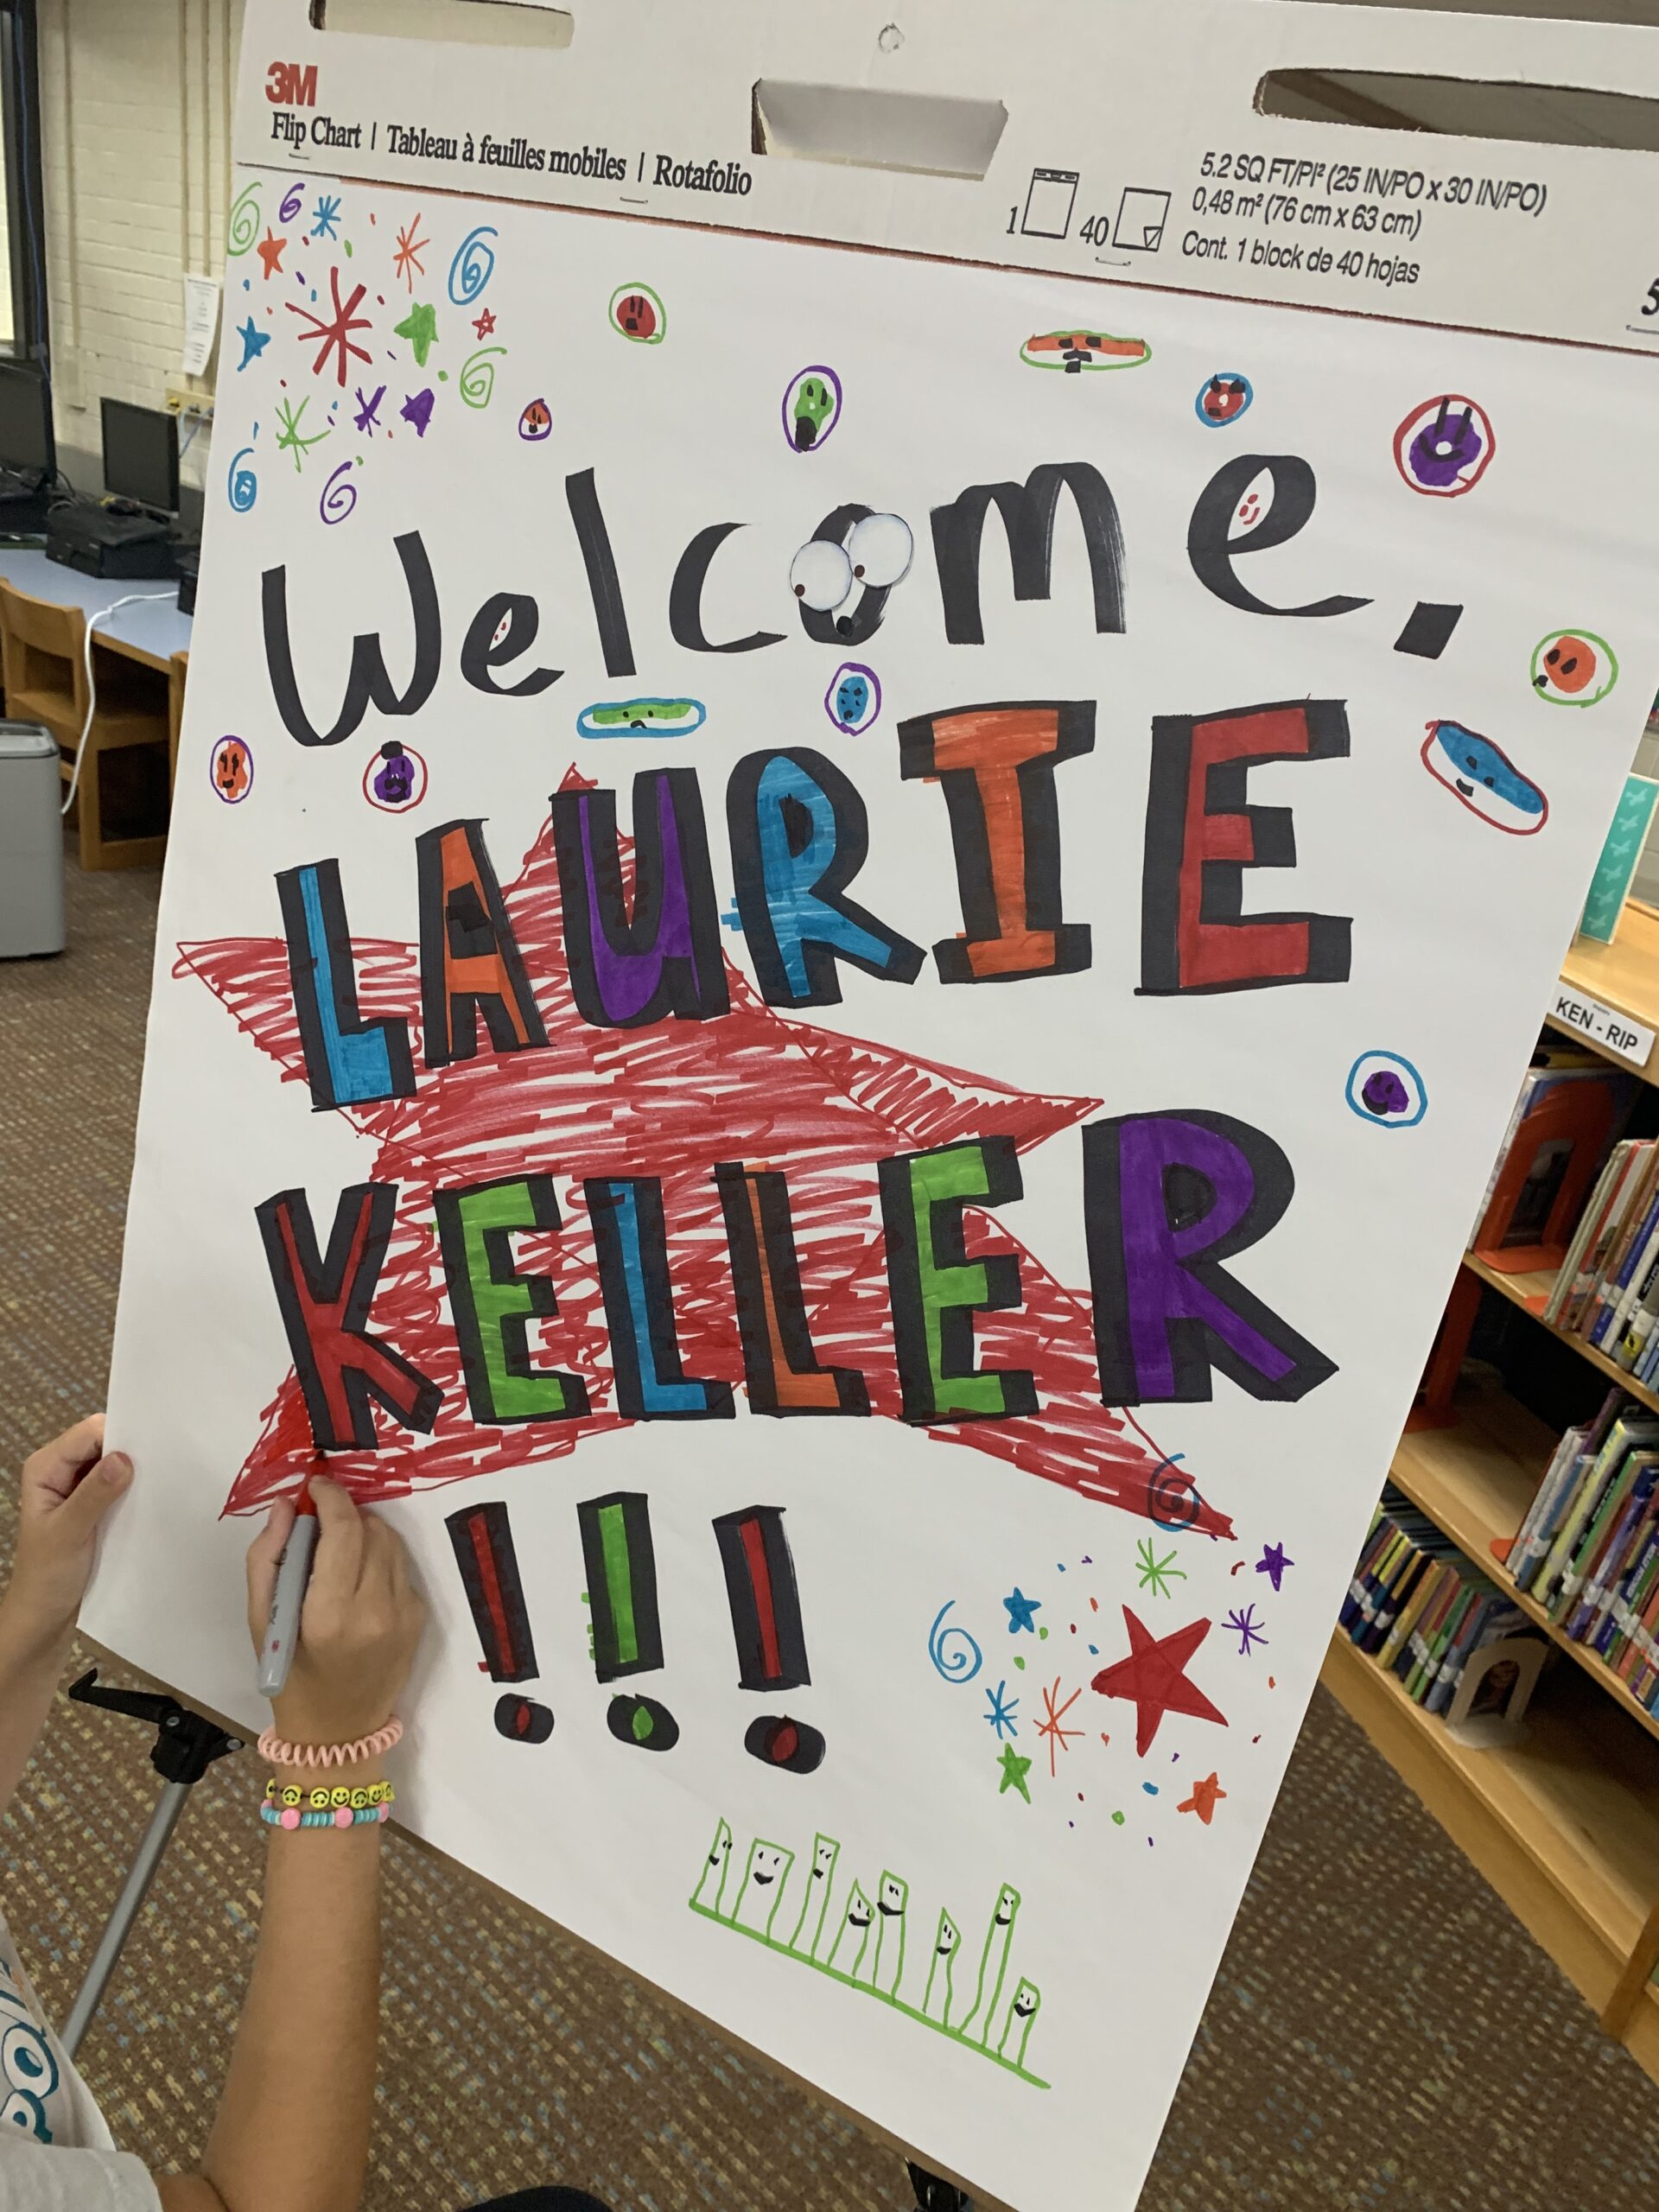 Instagramming an Author Visit: Laurie Keller!